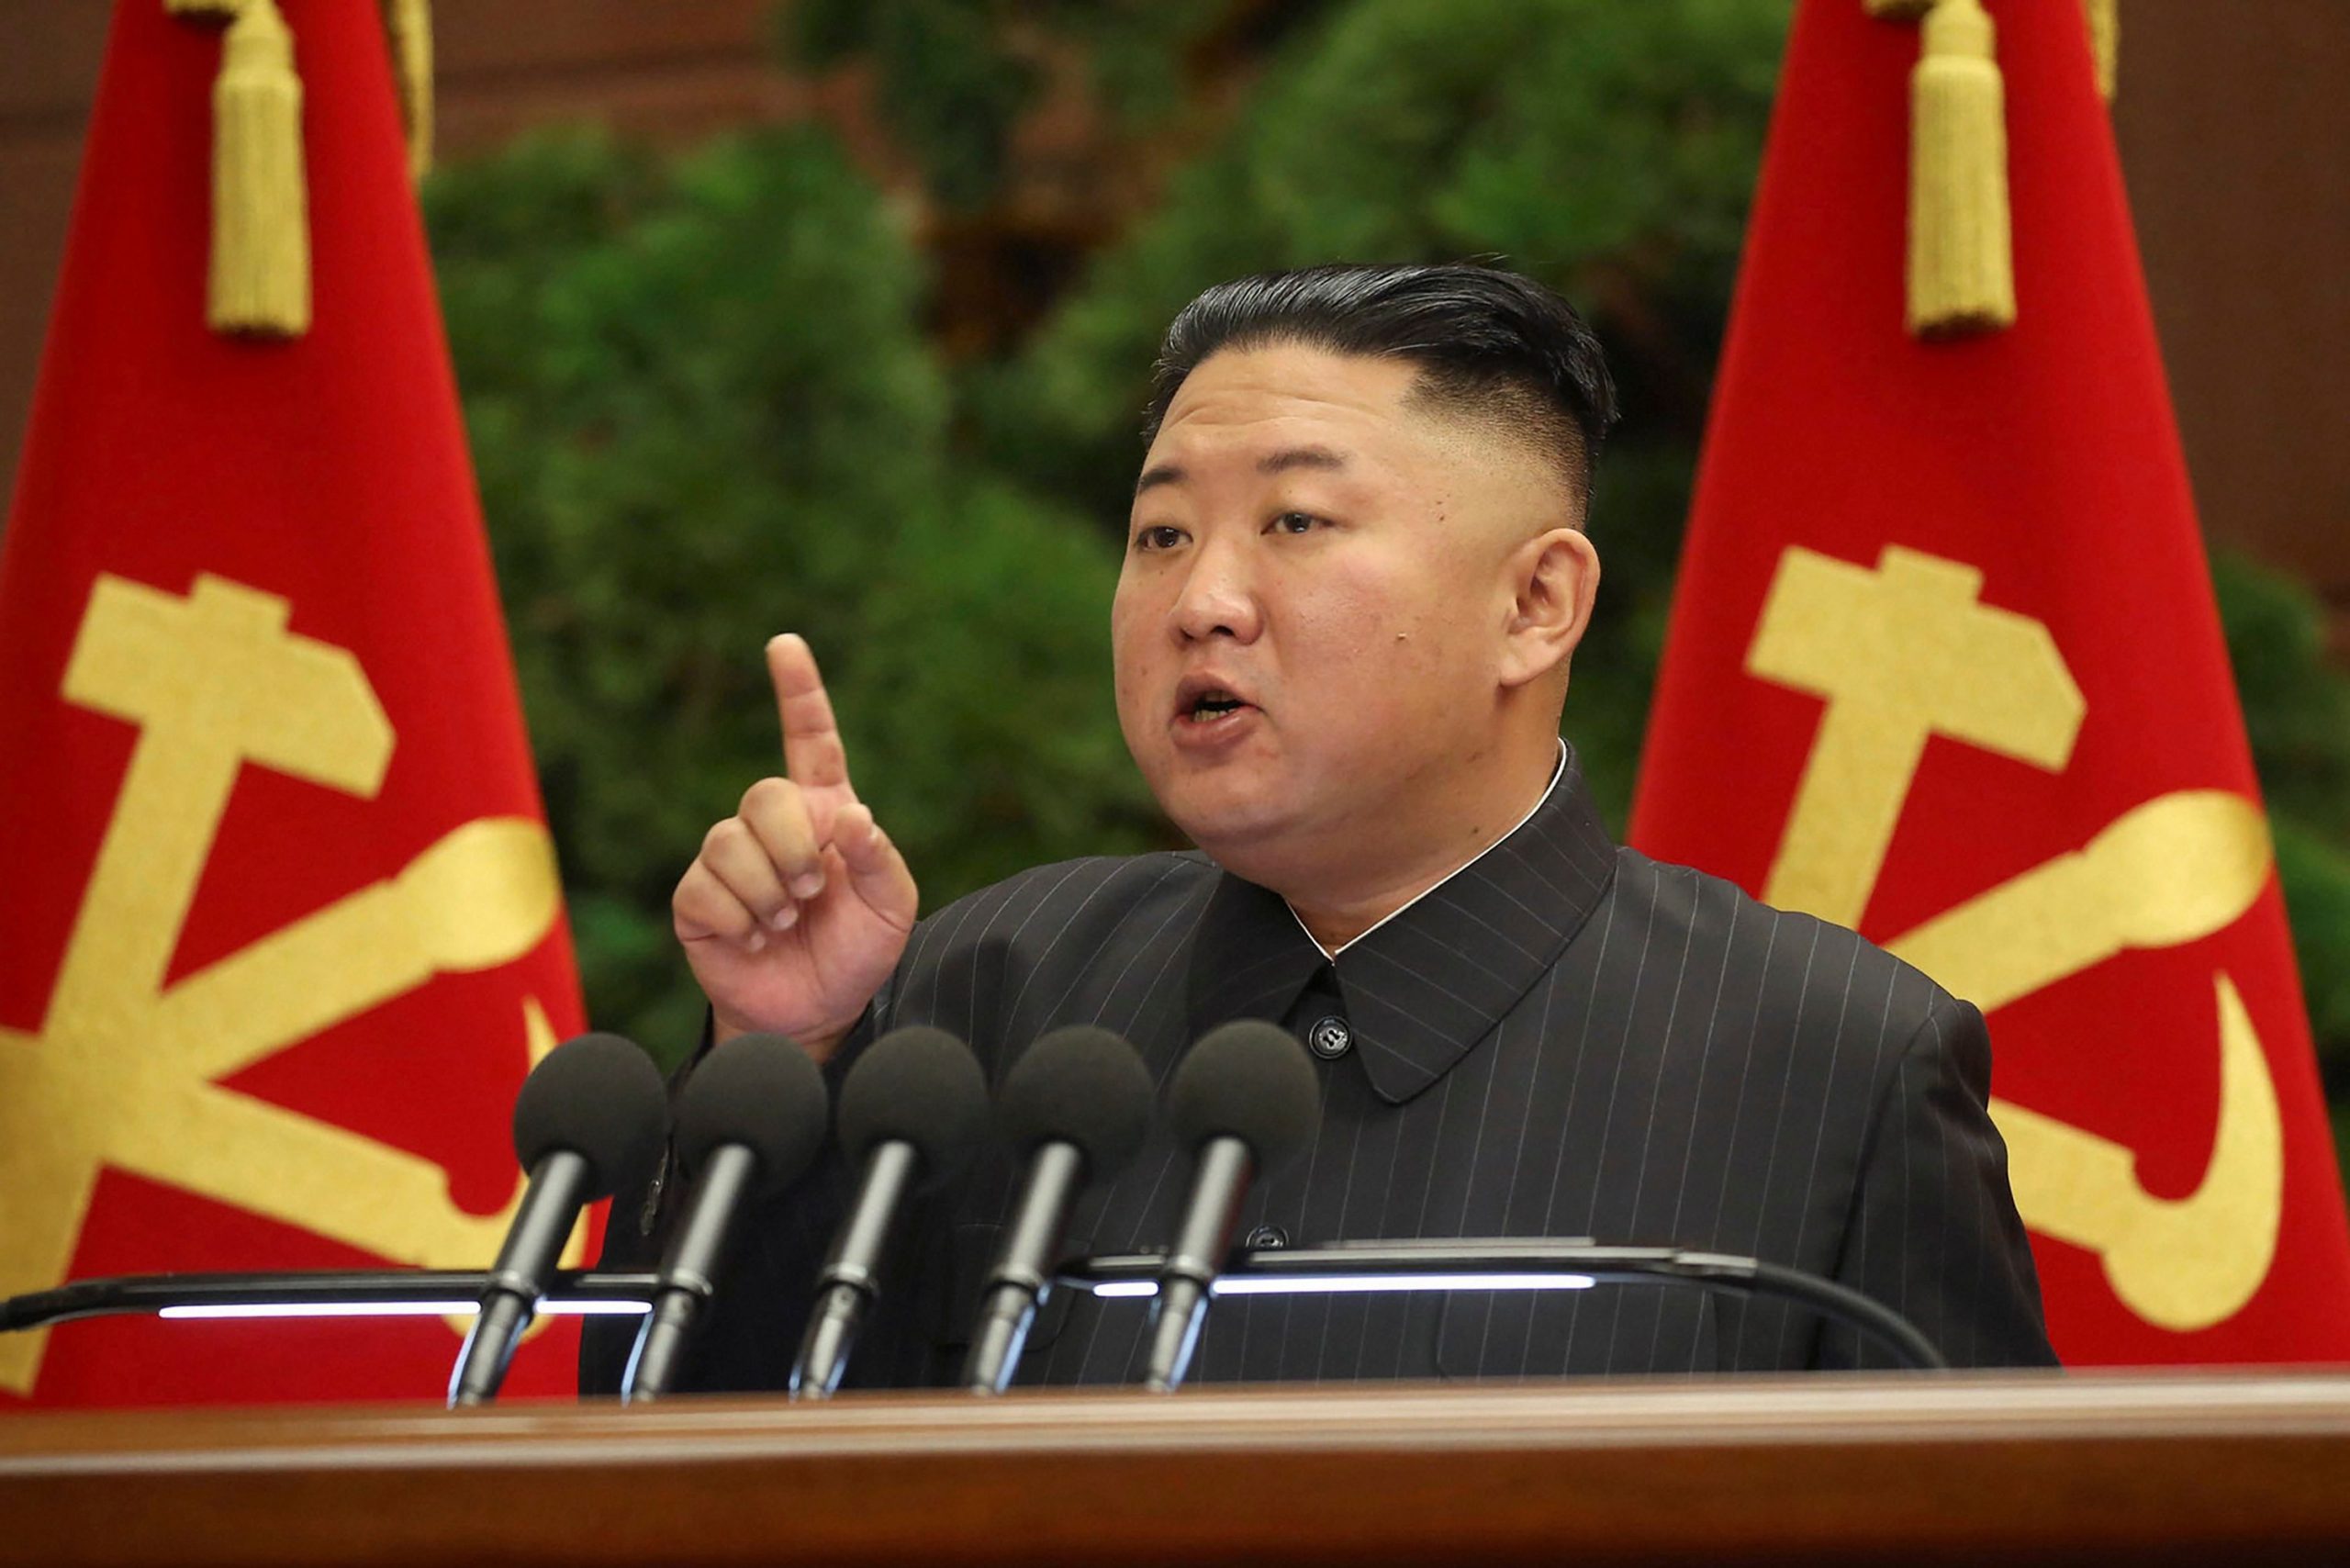 North Korea facing ‘harsh lean period’: UN food body